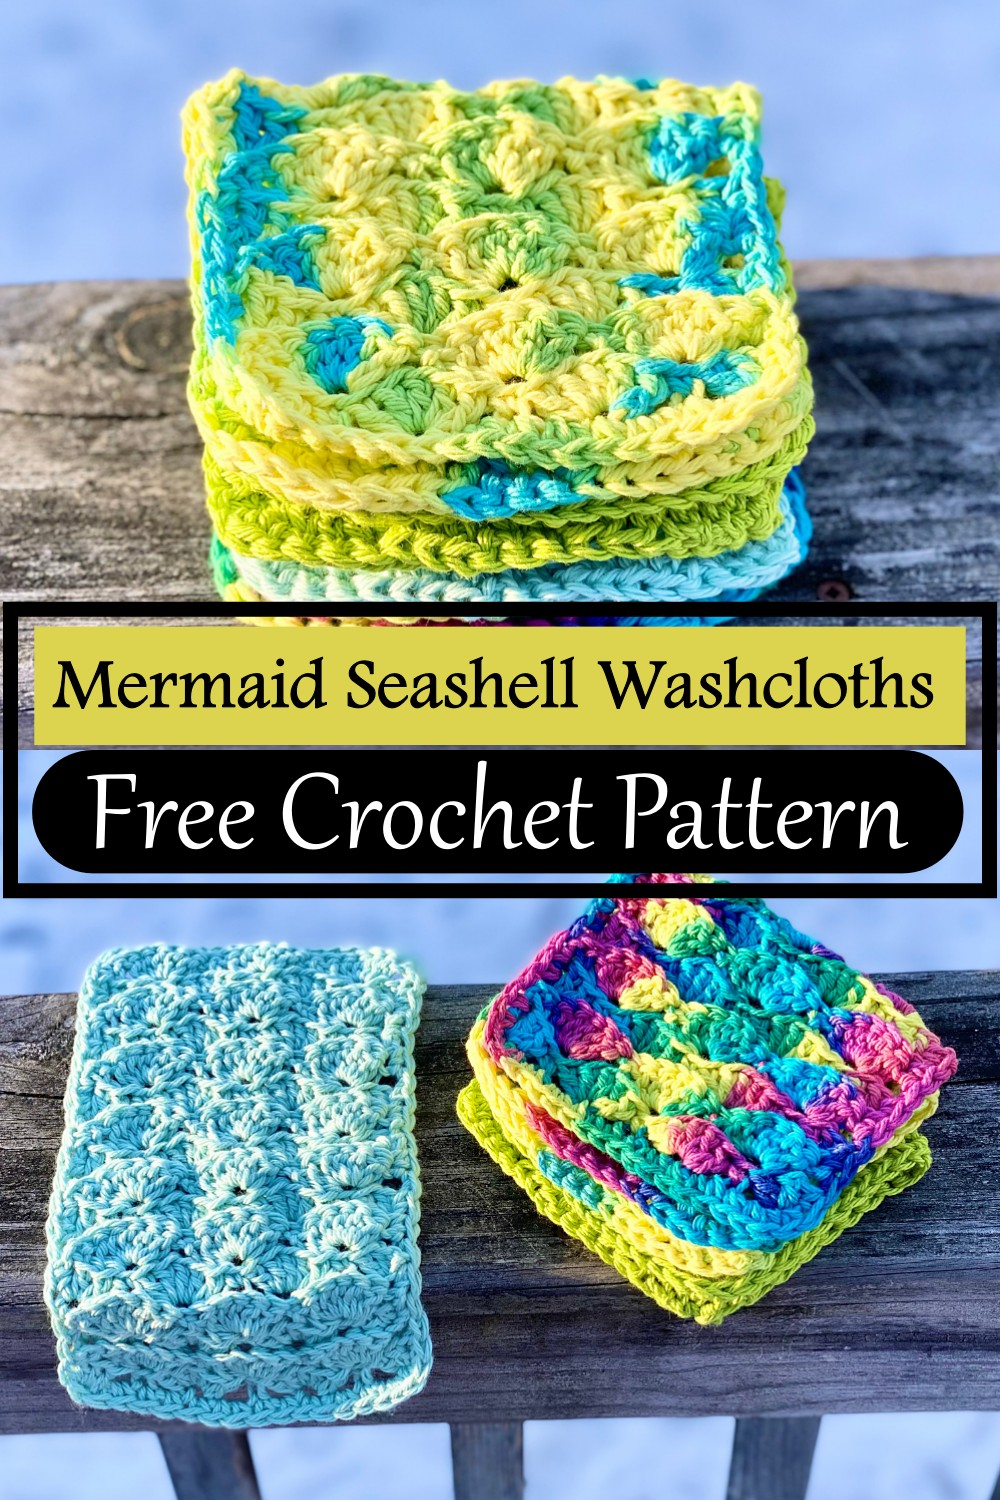 Mermaid Seashell Washcloths